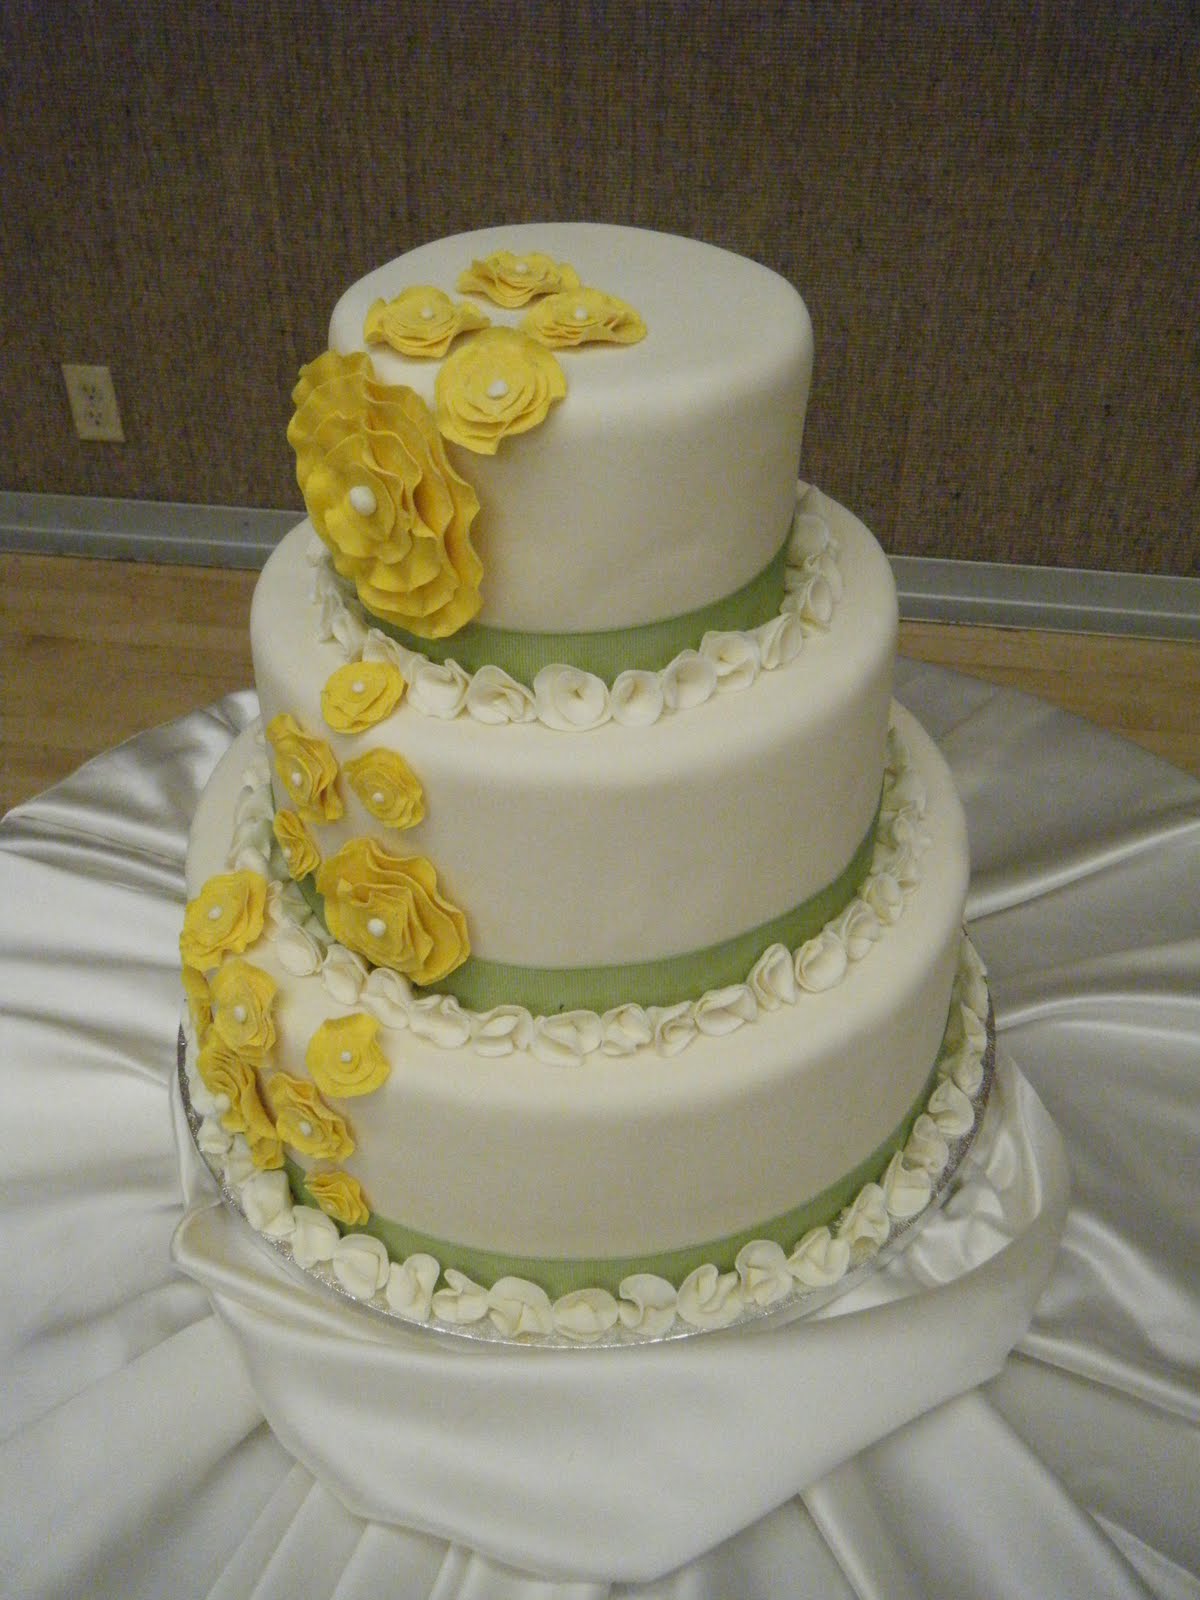 Cool flower wedding cake